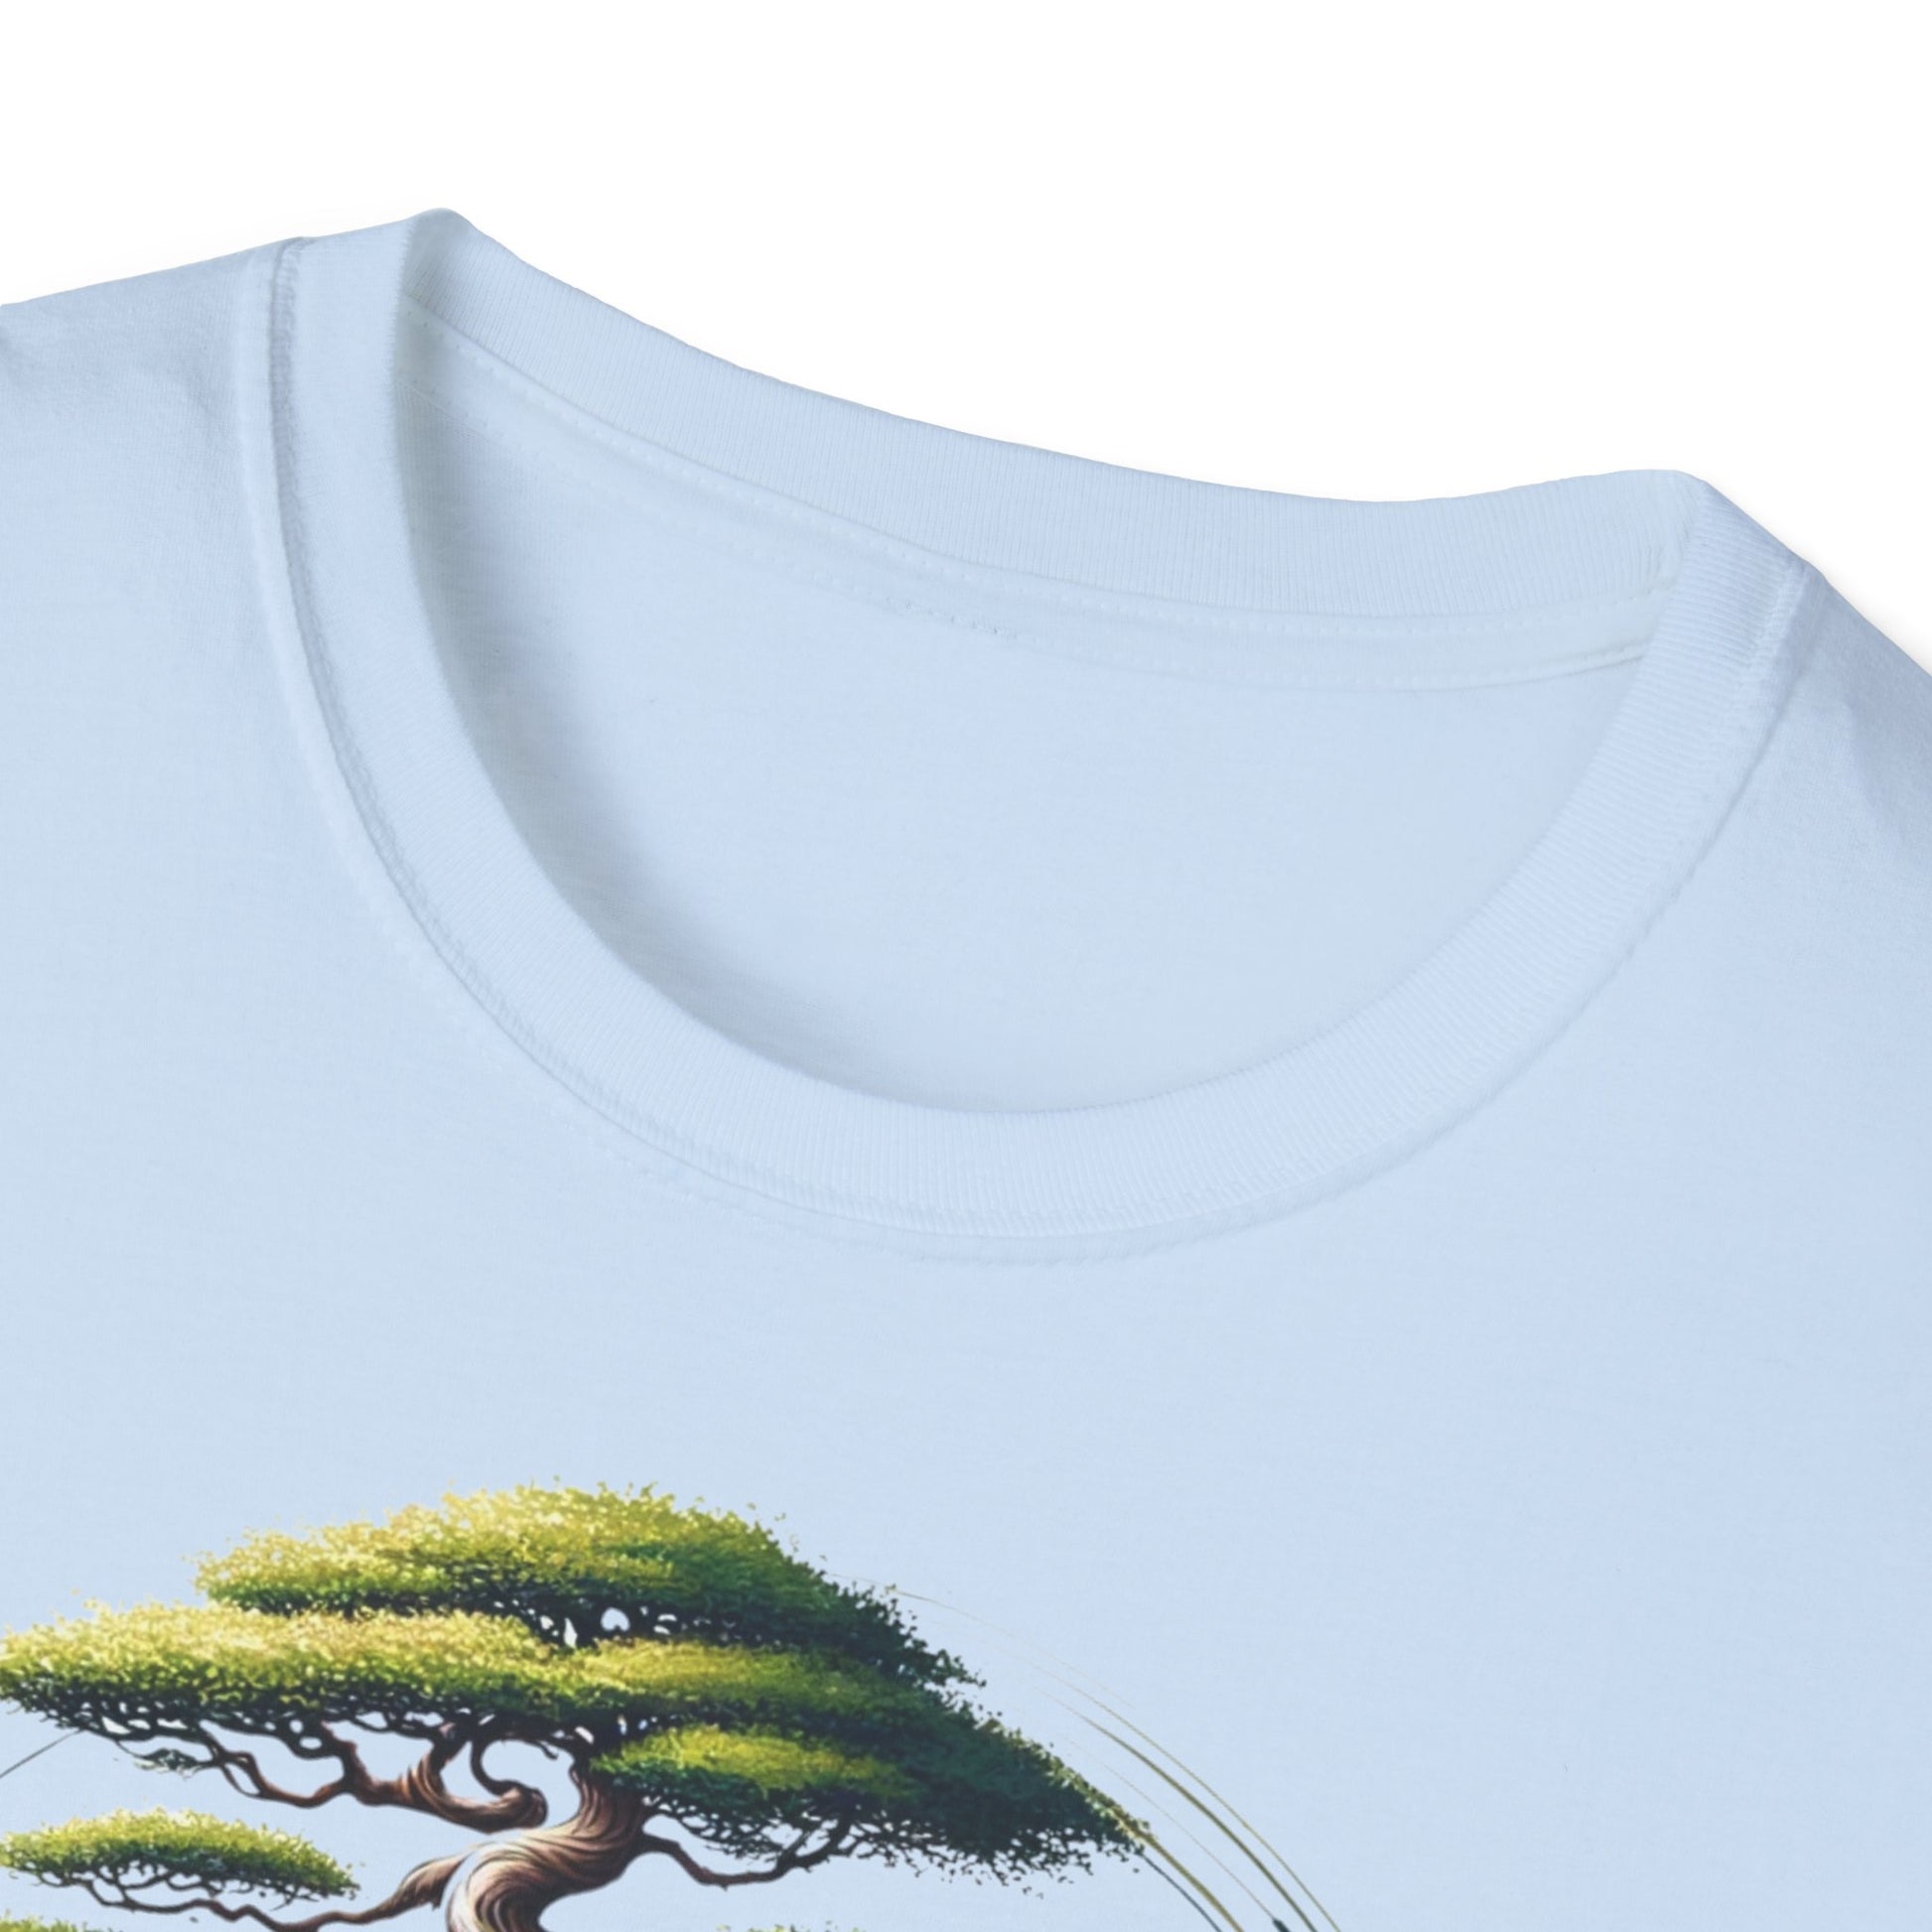 bonsai bonsai t-shirt exclusive t-shirts japanese spanish t-shirts unique t-shirts